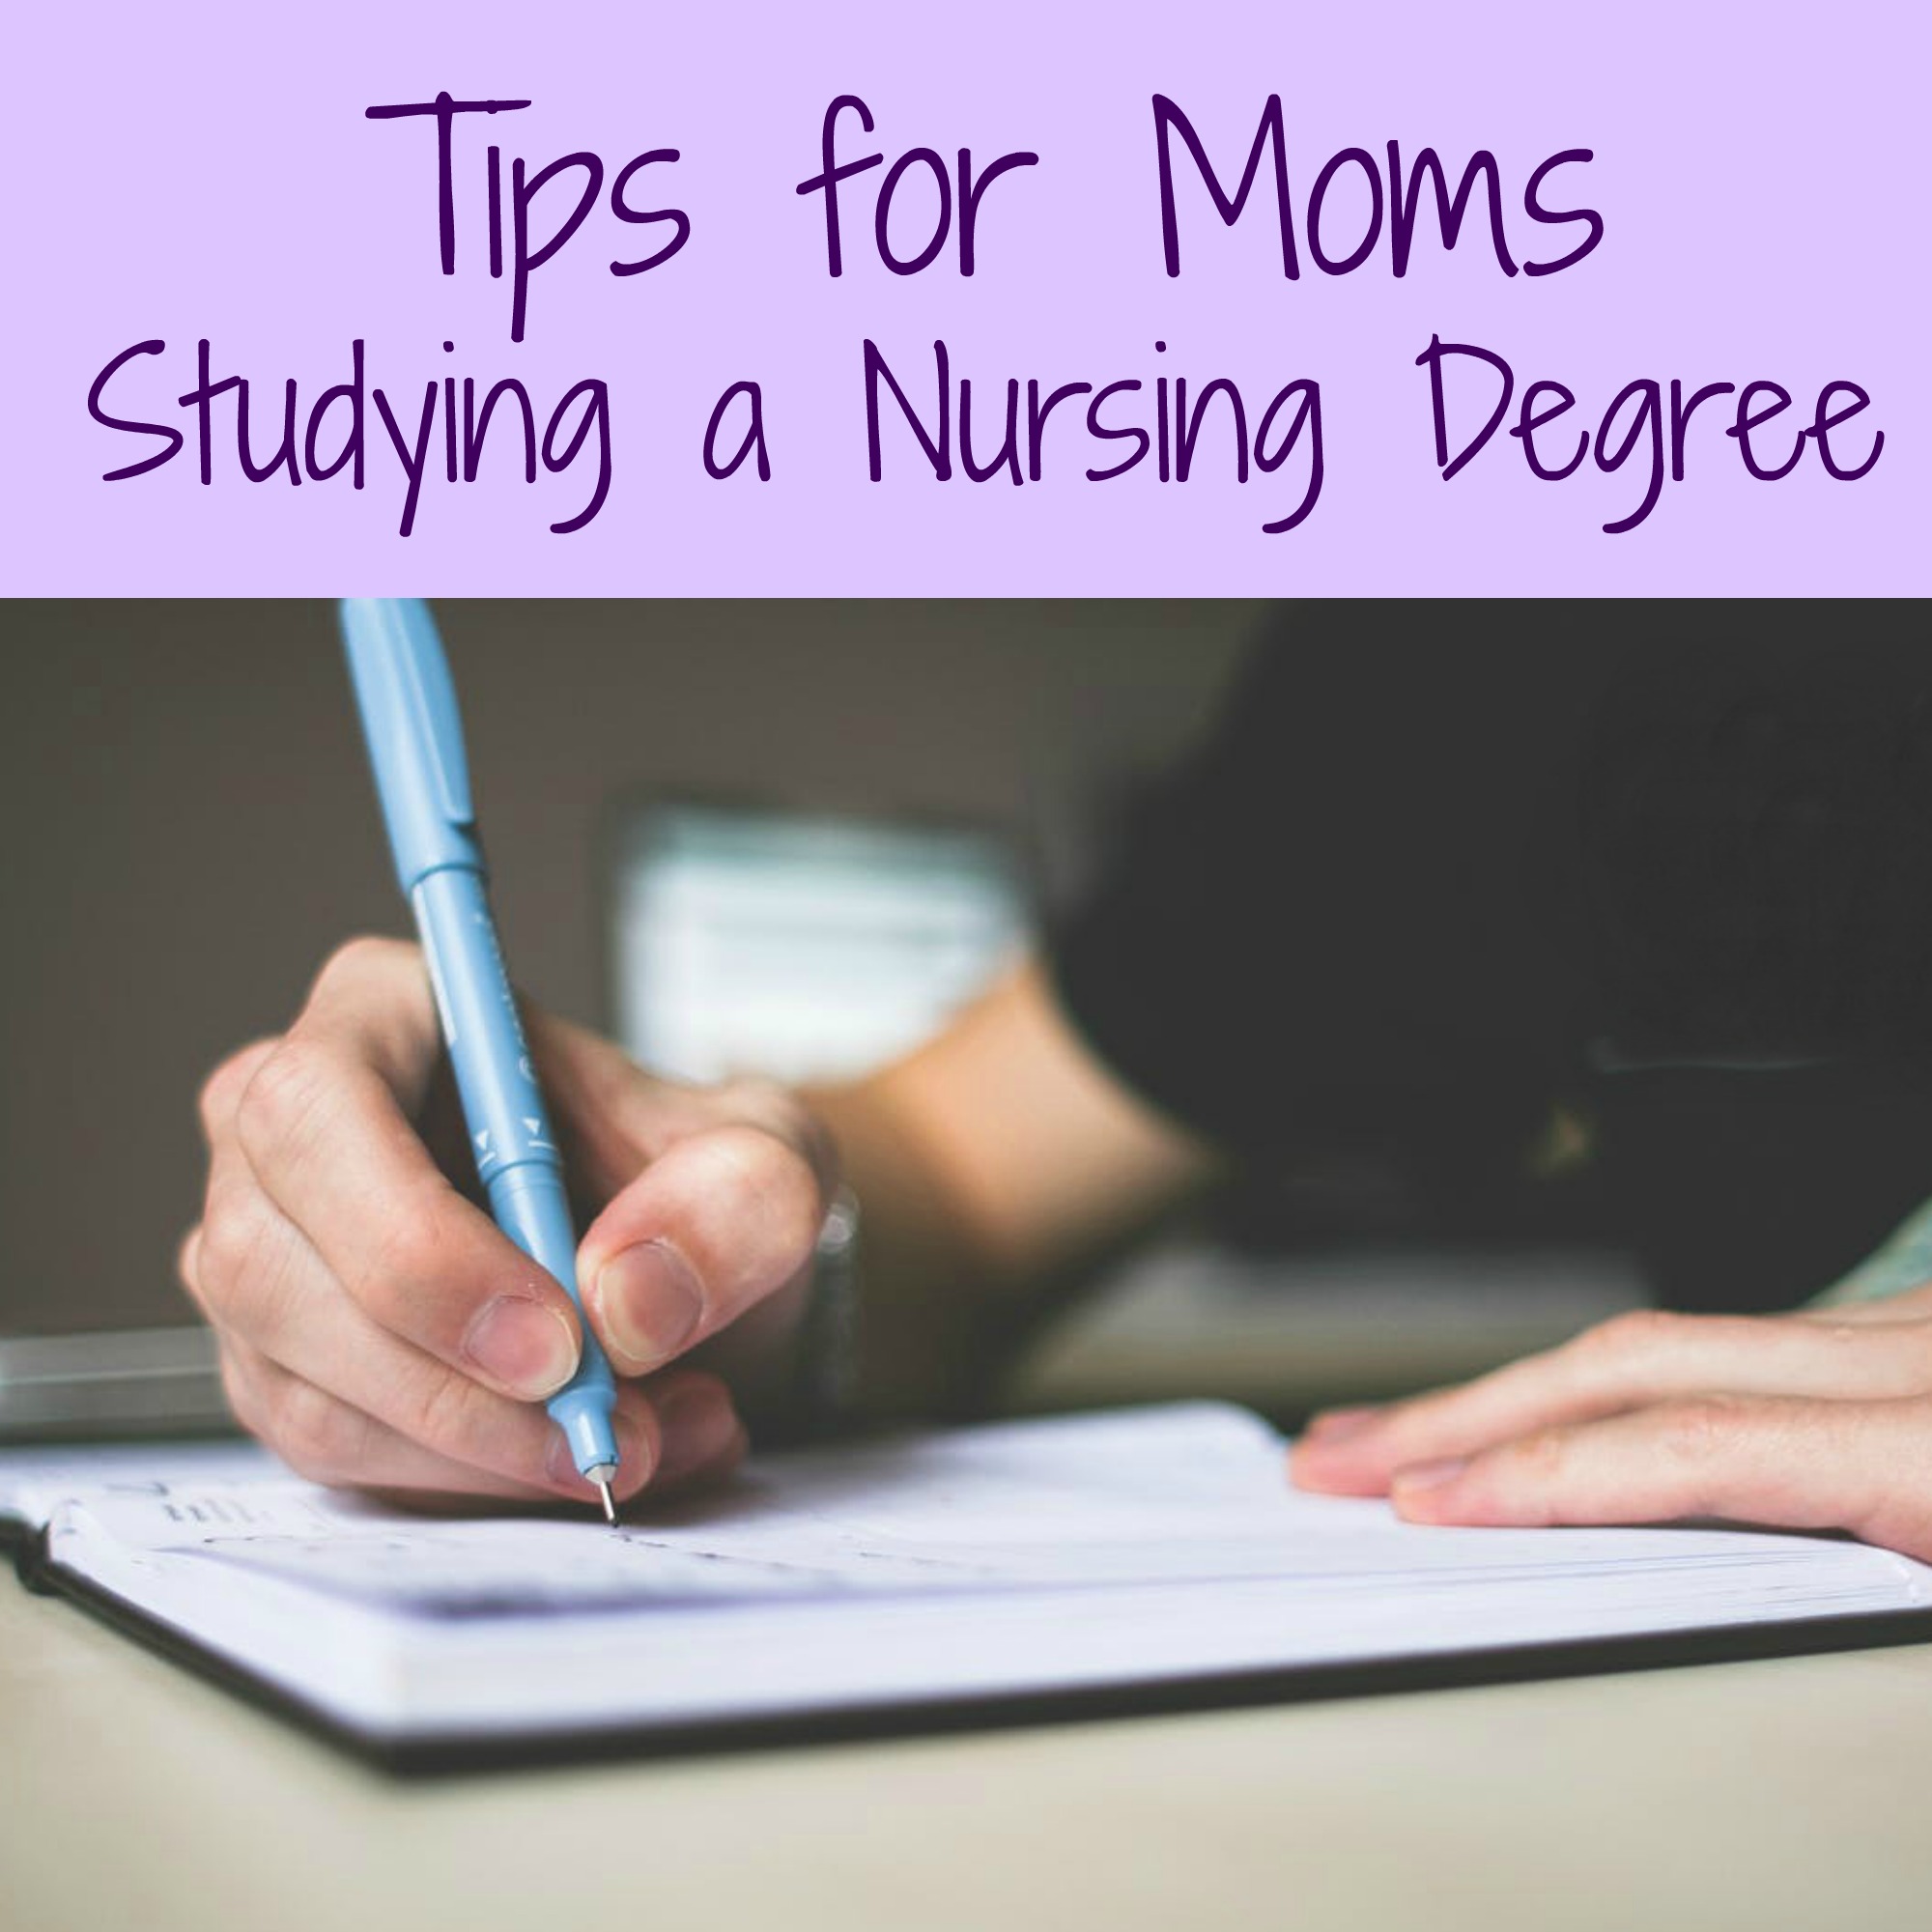 Tips for Moms Studying a Nursing Degree